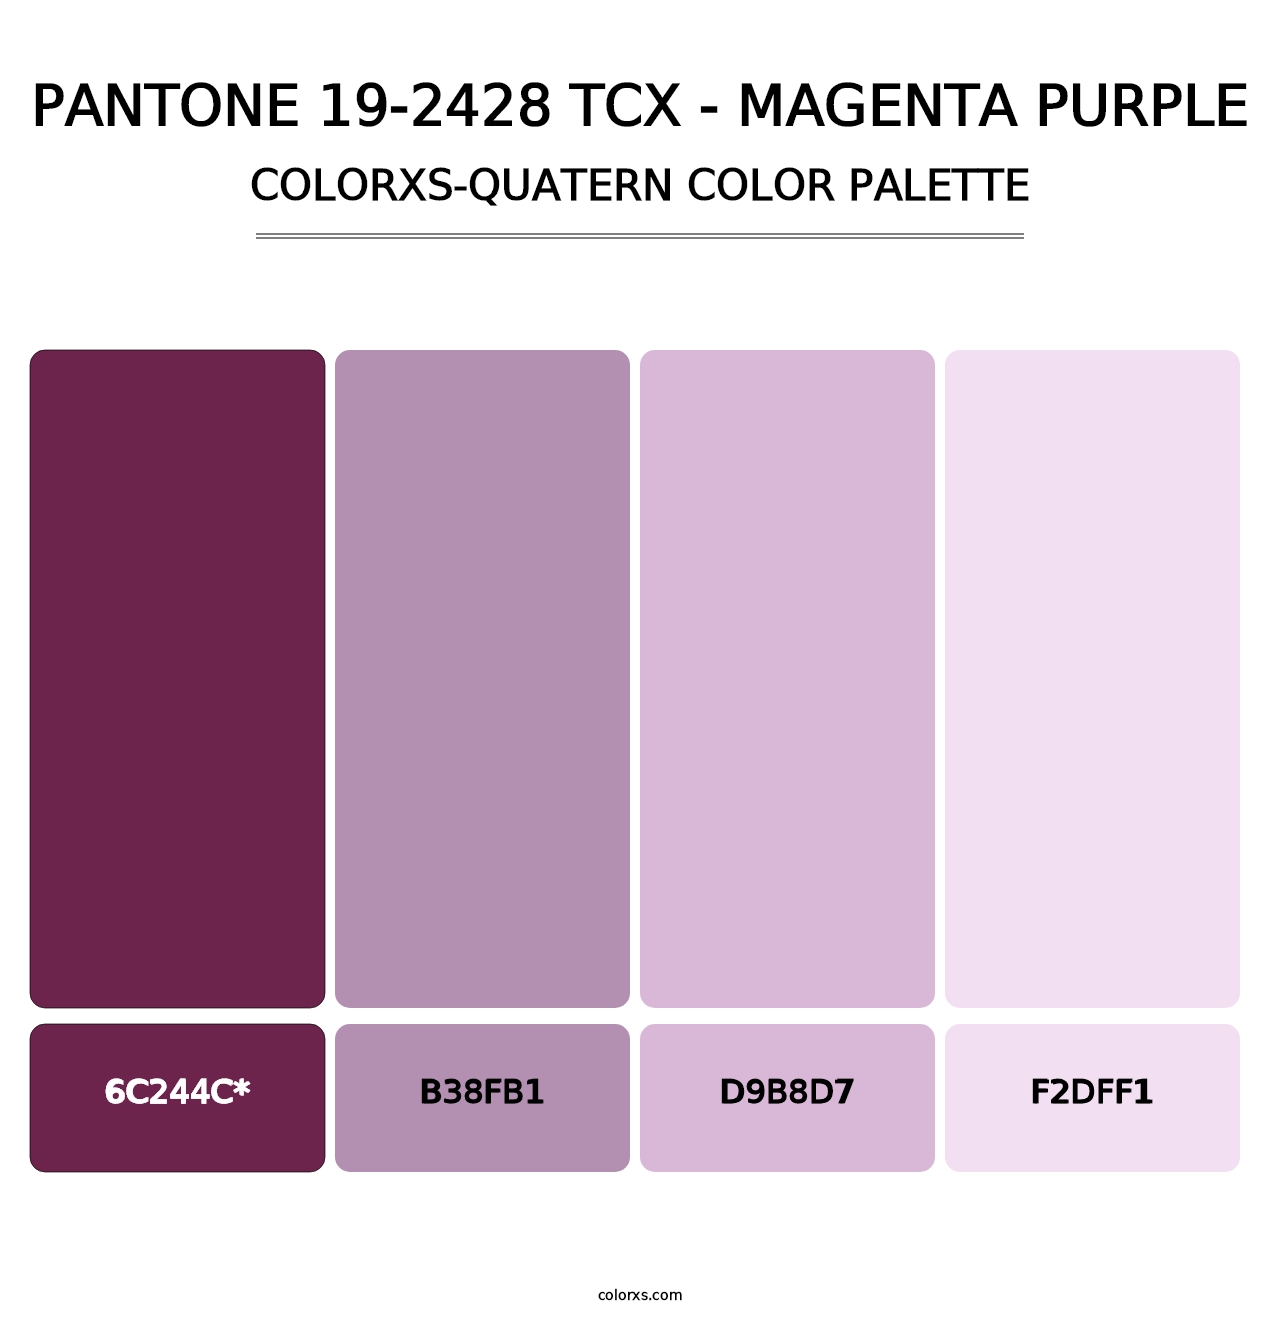 PANTONE 19-2428 TCX - Magenta Purple - Colorxs Quatern Palette